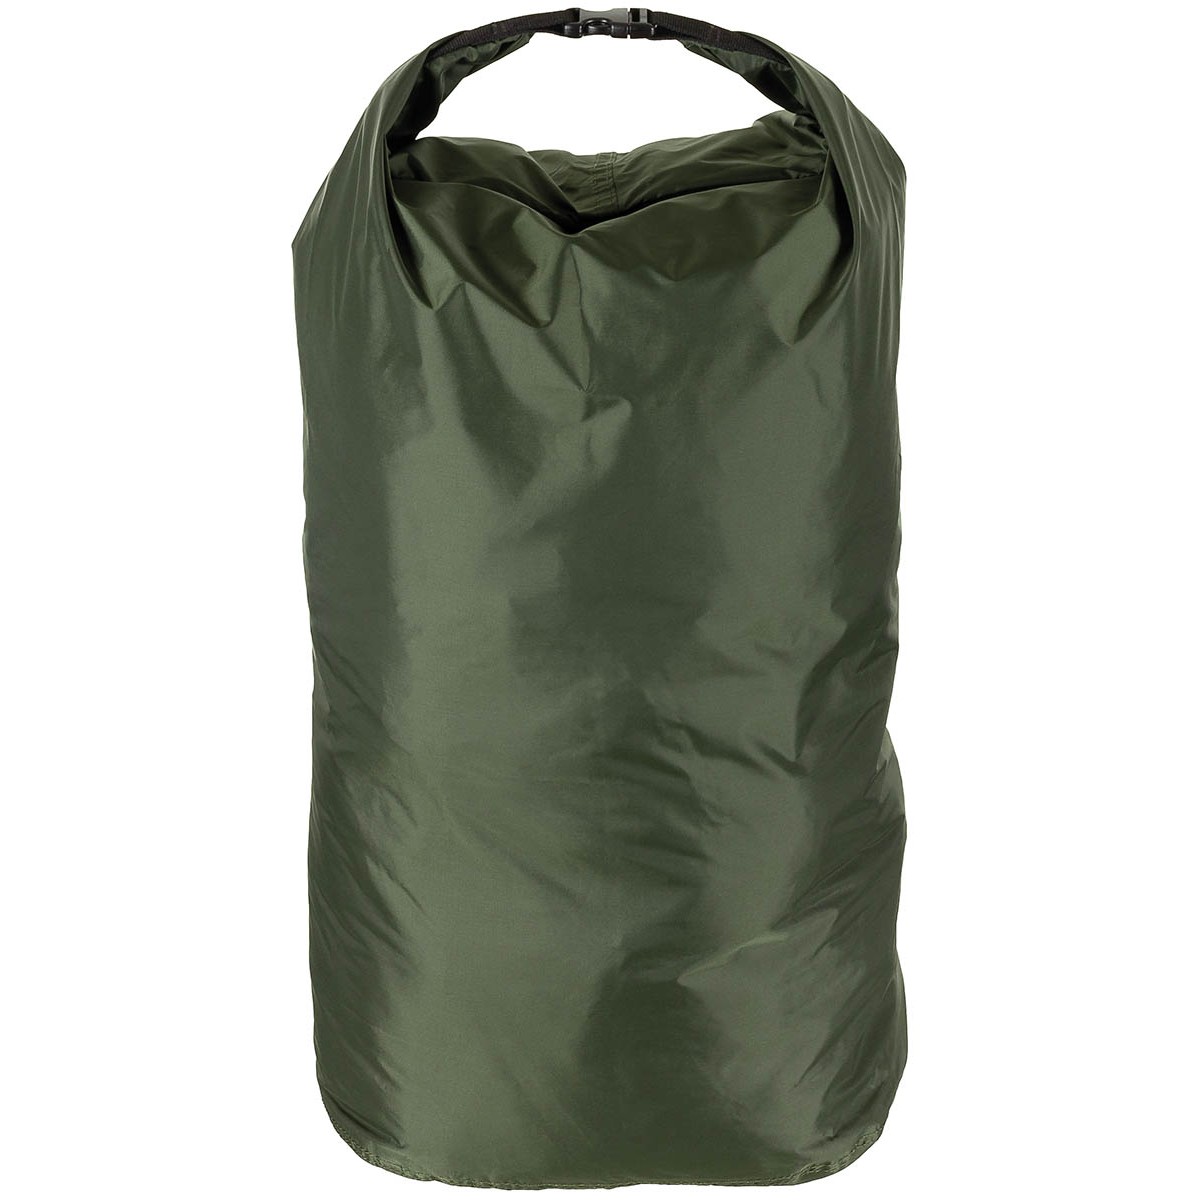 Voděodolná taška vak na výbavu 22L zelený Dry Bag OD Green Velká Británie originál